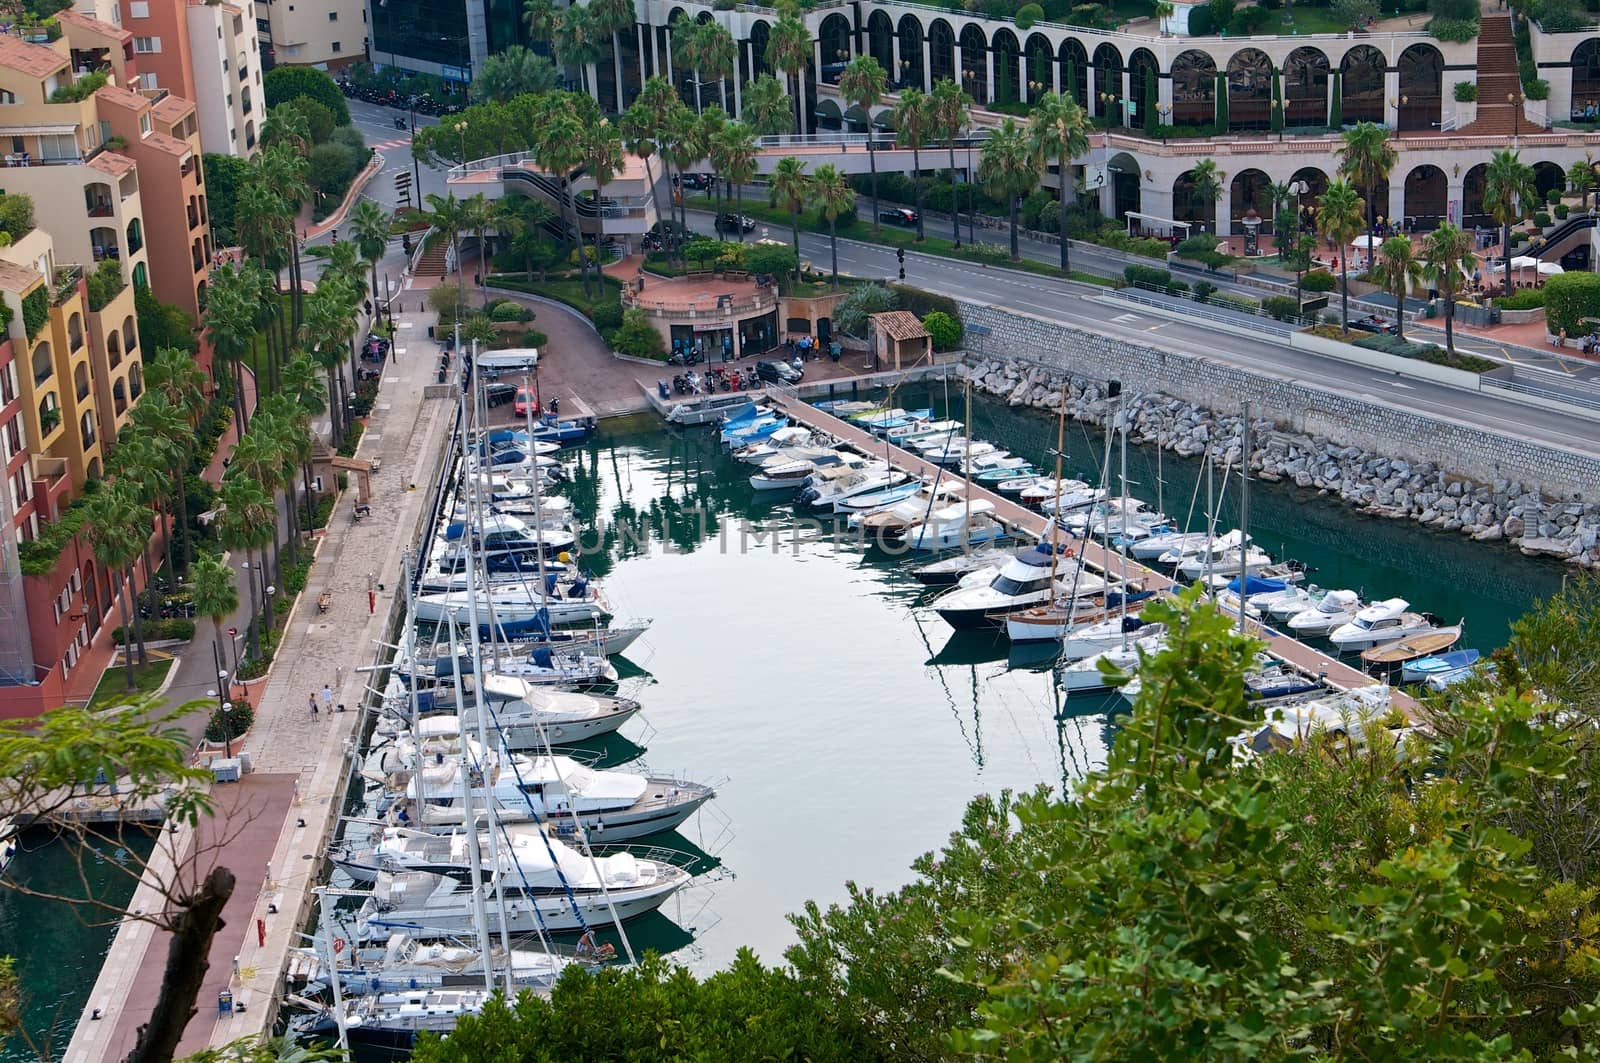 Marina in Monaco by dyvan